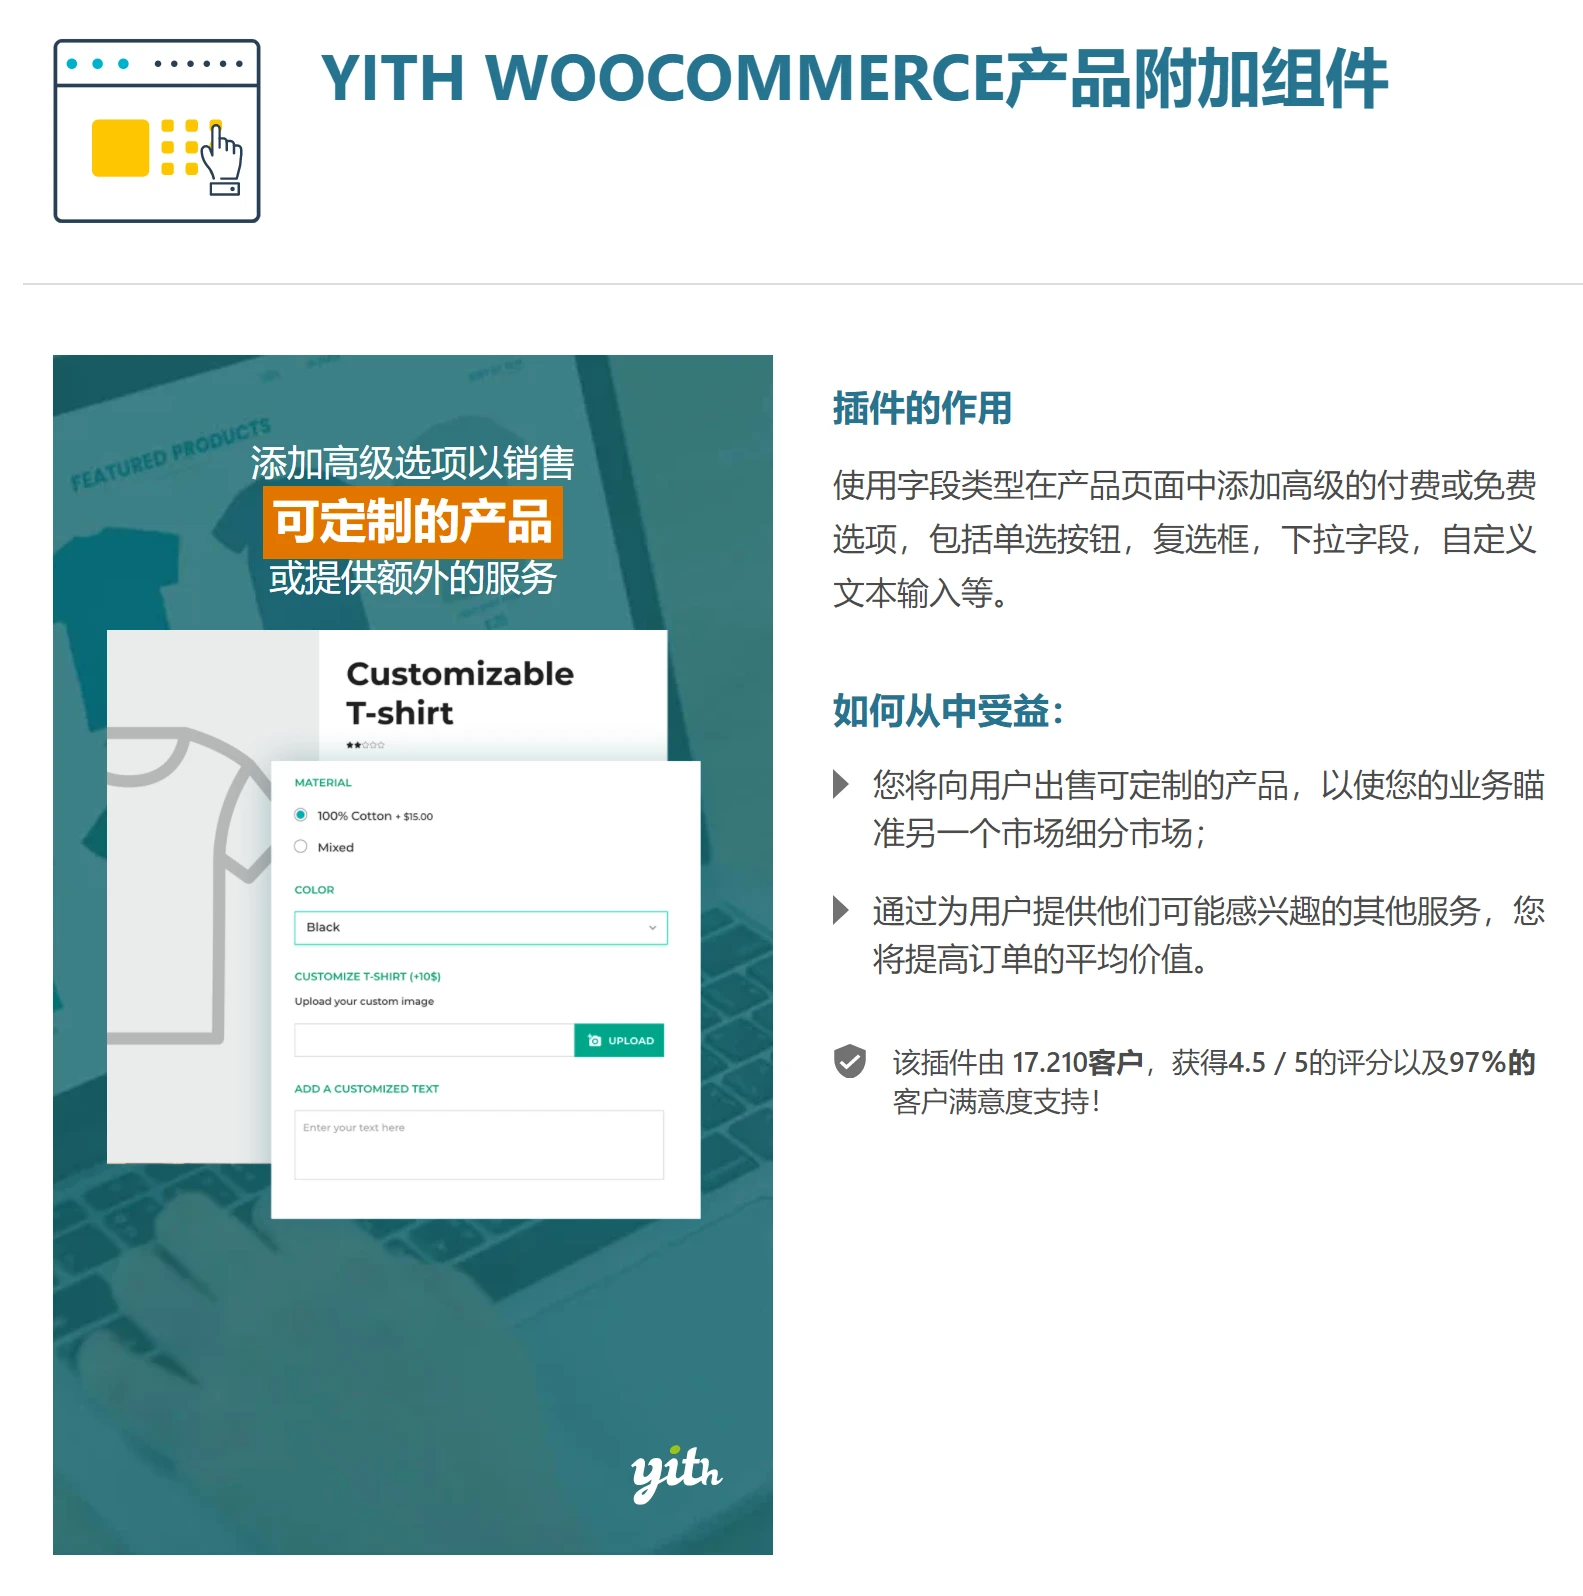 YITH WooCommerce Product Add-ons 产品功能增强扩展 破解专业版 